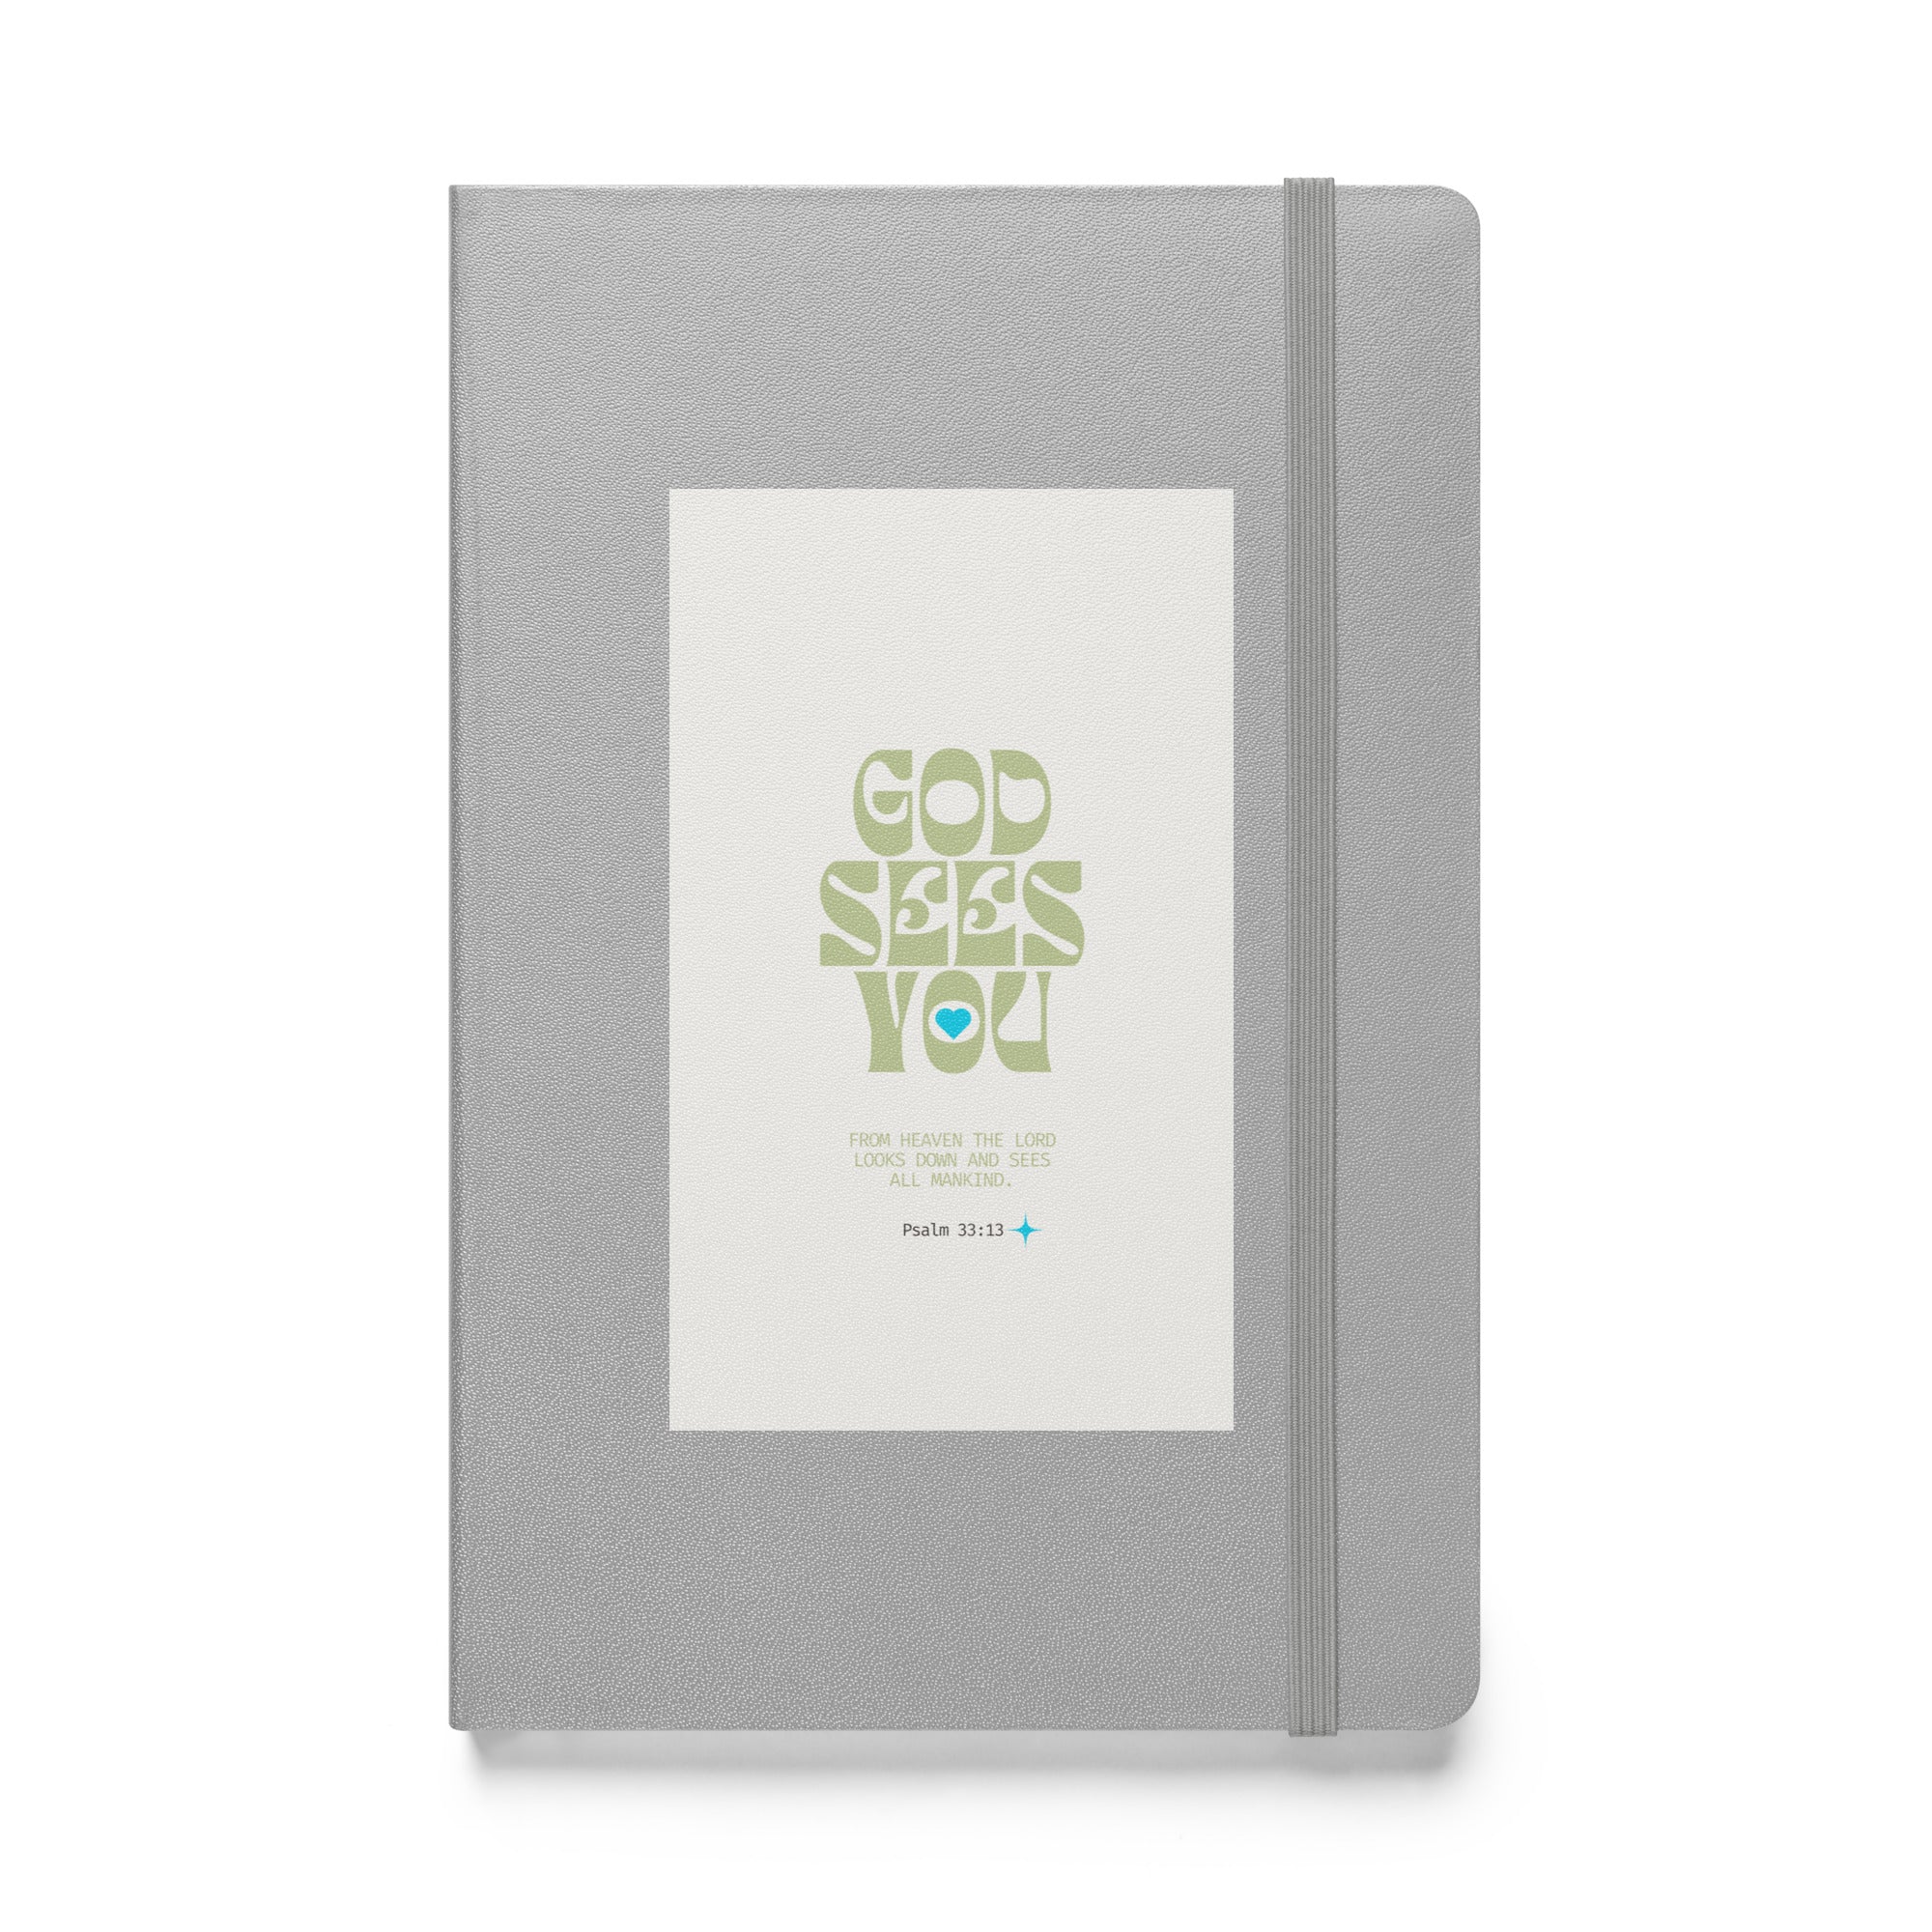 Hardcover bound notebook - Psalm 33:13